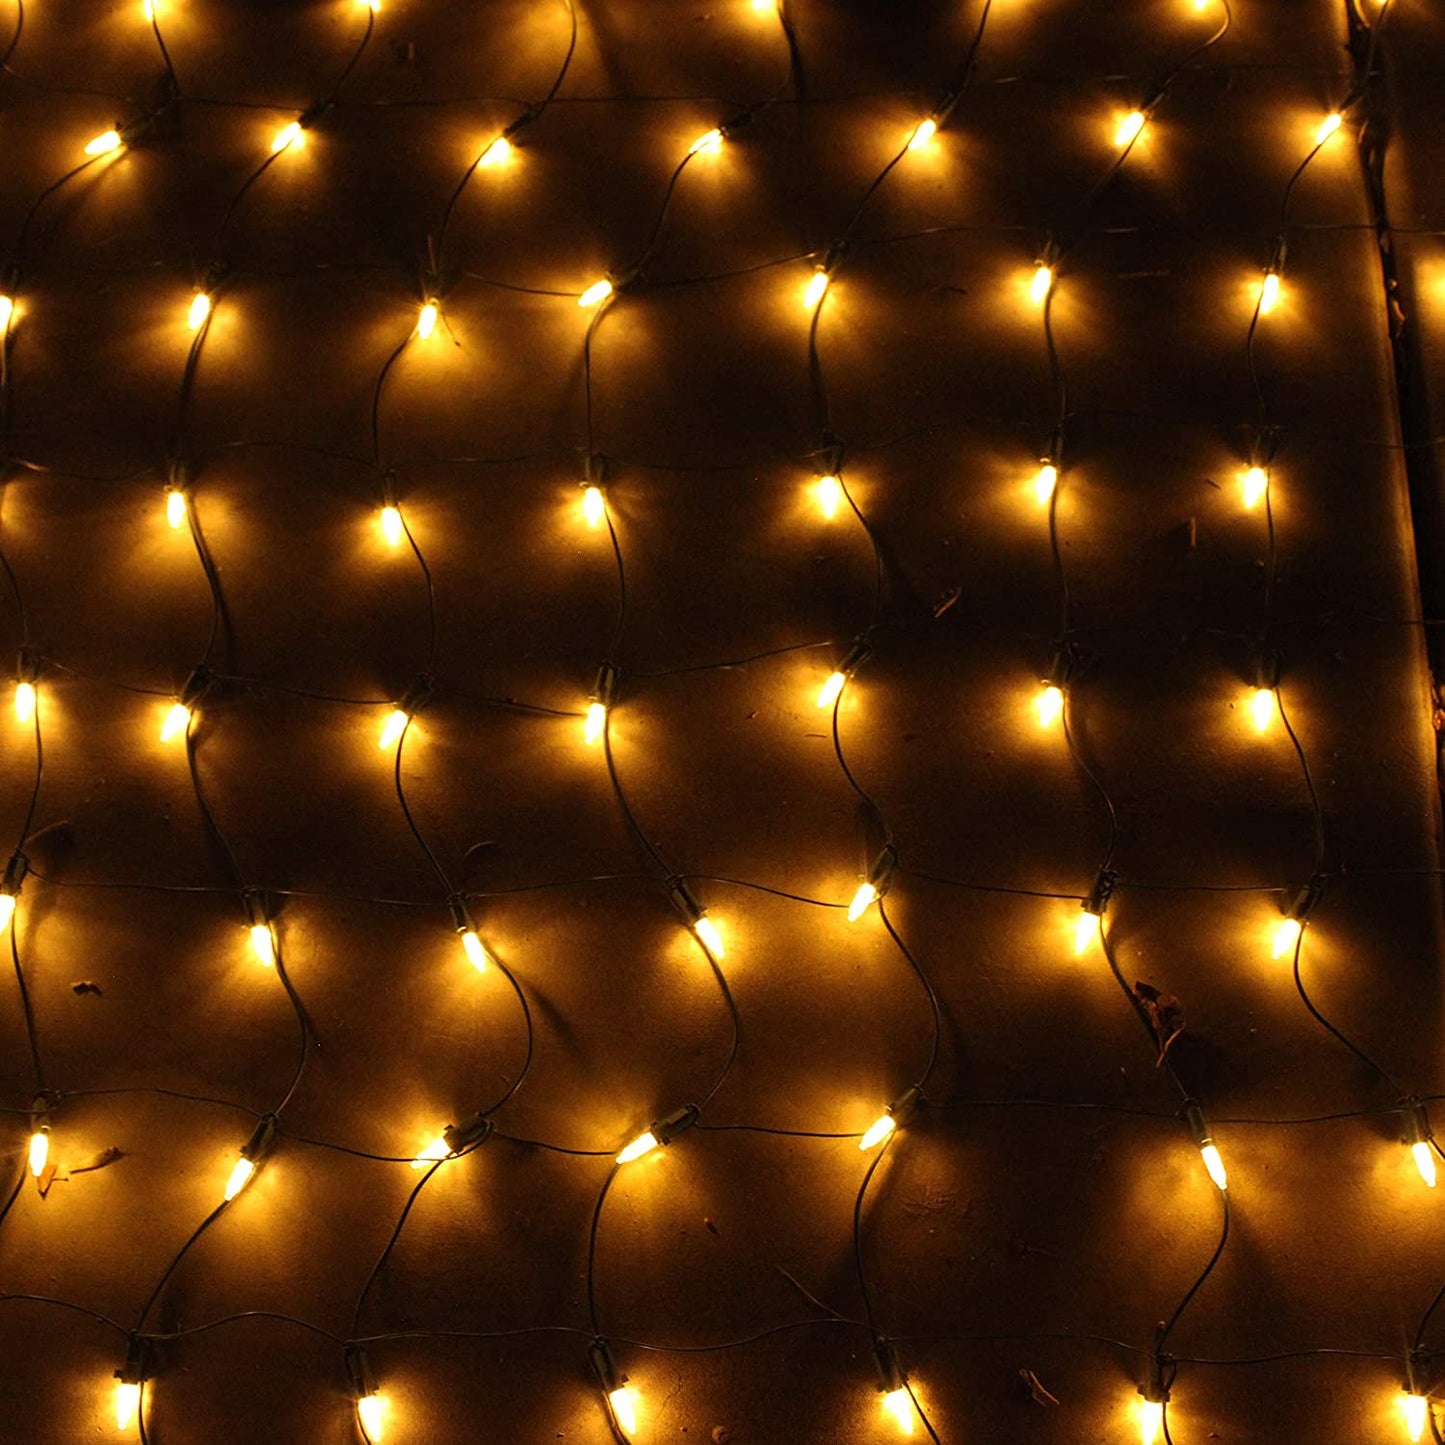 150 LED Christmas Lights Net Lights, Warm White